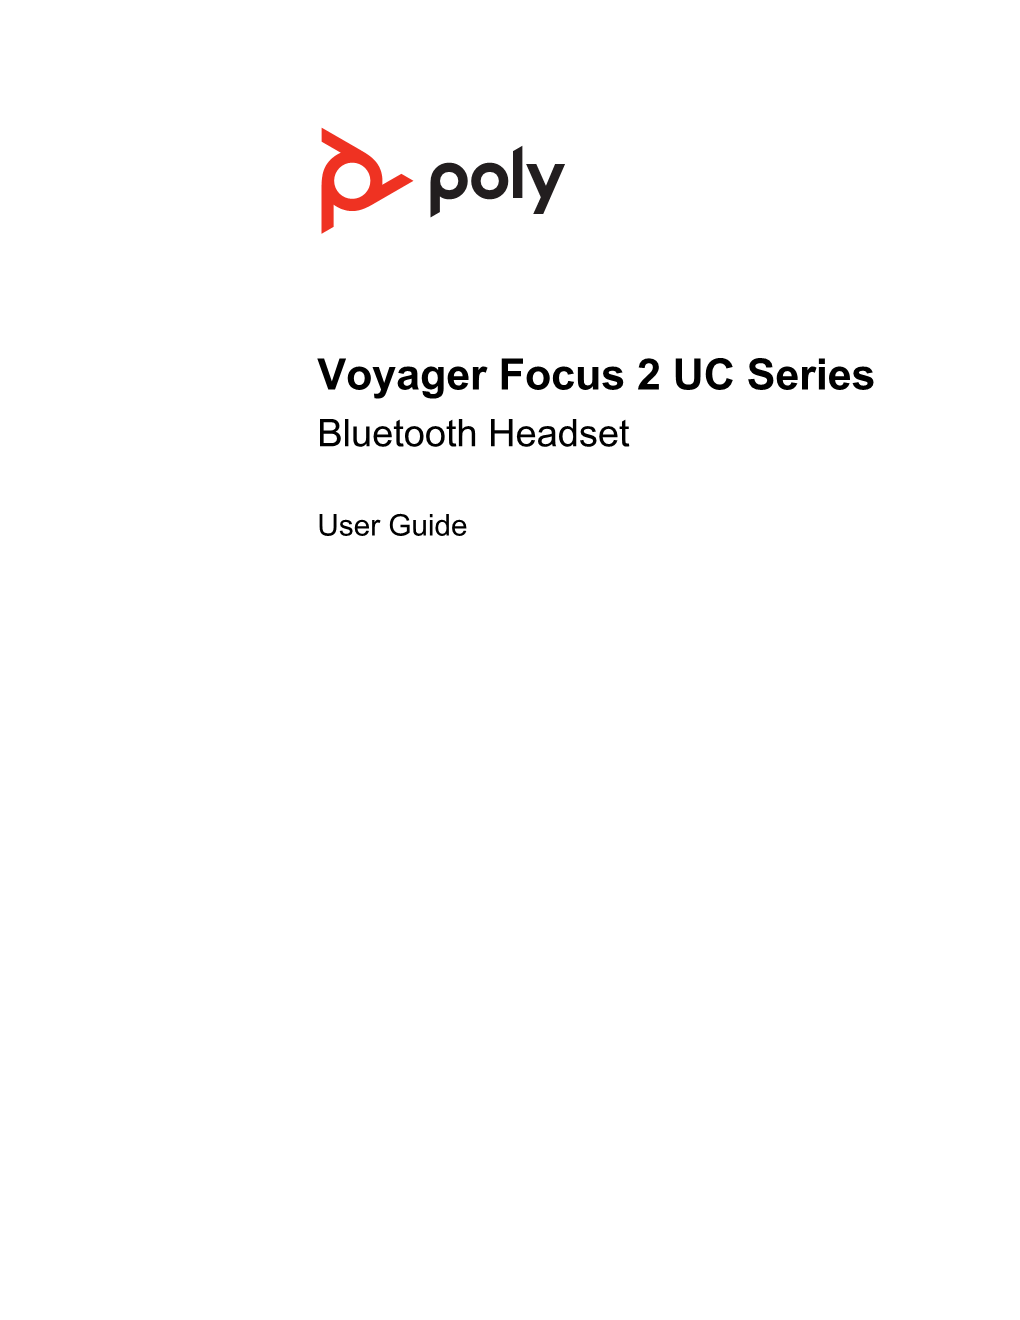 Voyager Focus 2 UC Series Bluetooth Headset